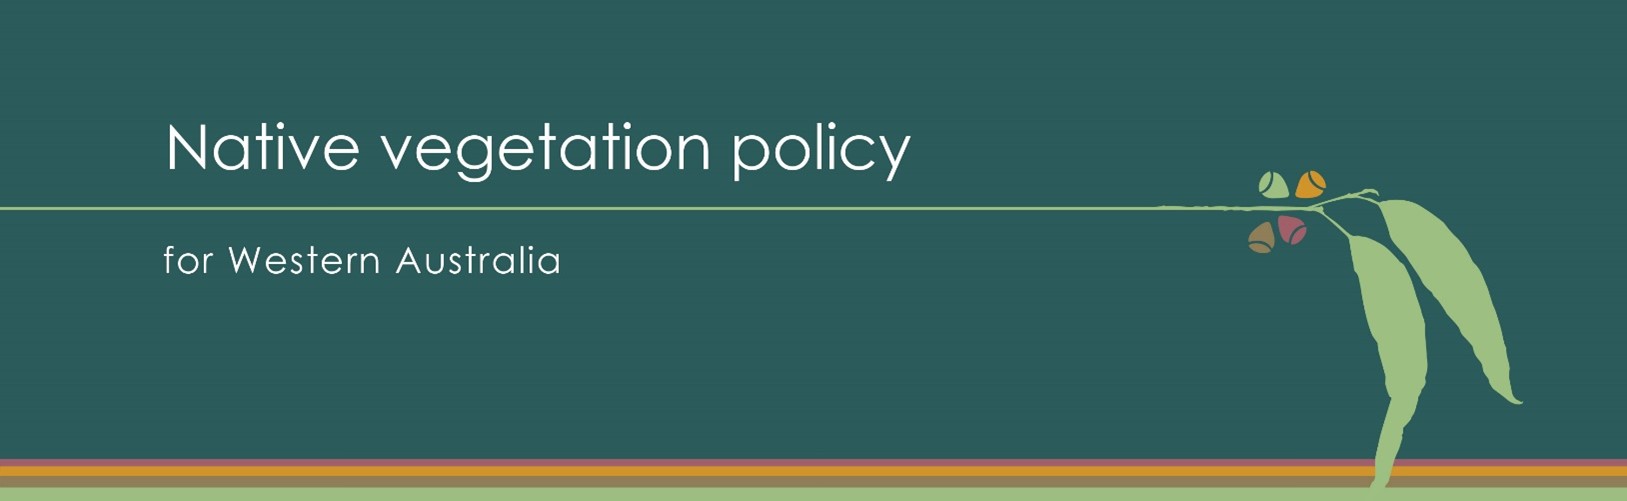 Native Vegetation Policy banner